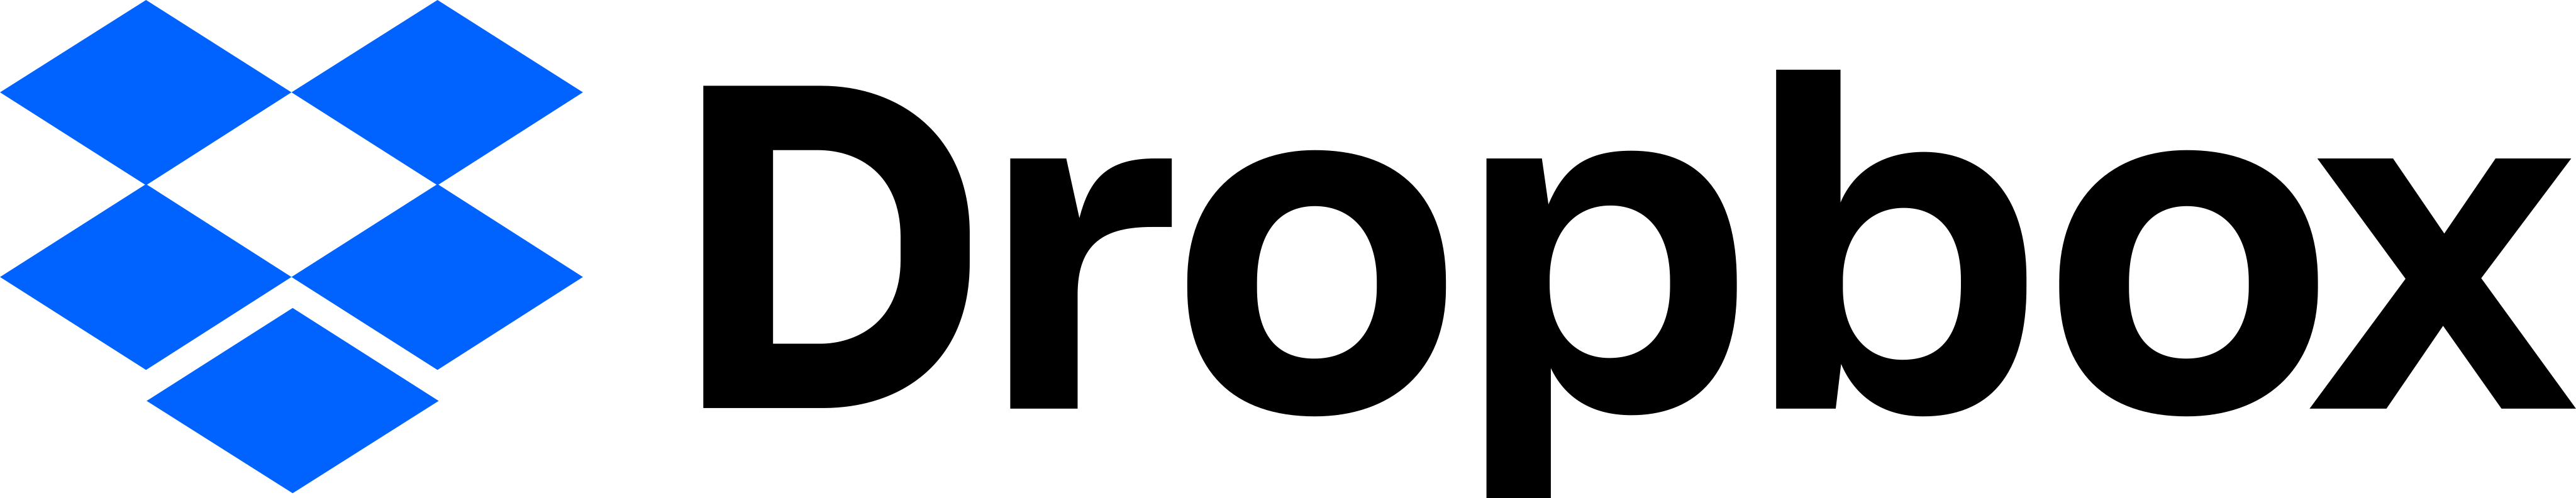 Dropbox Logo.